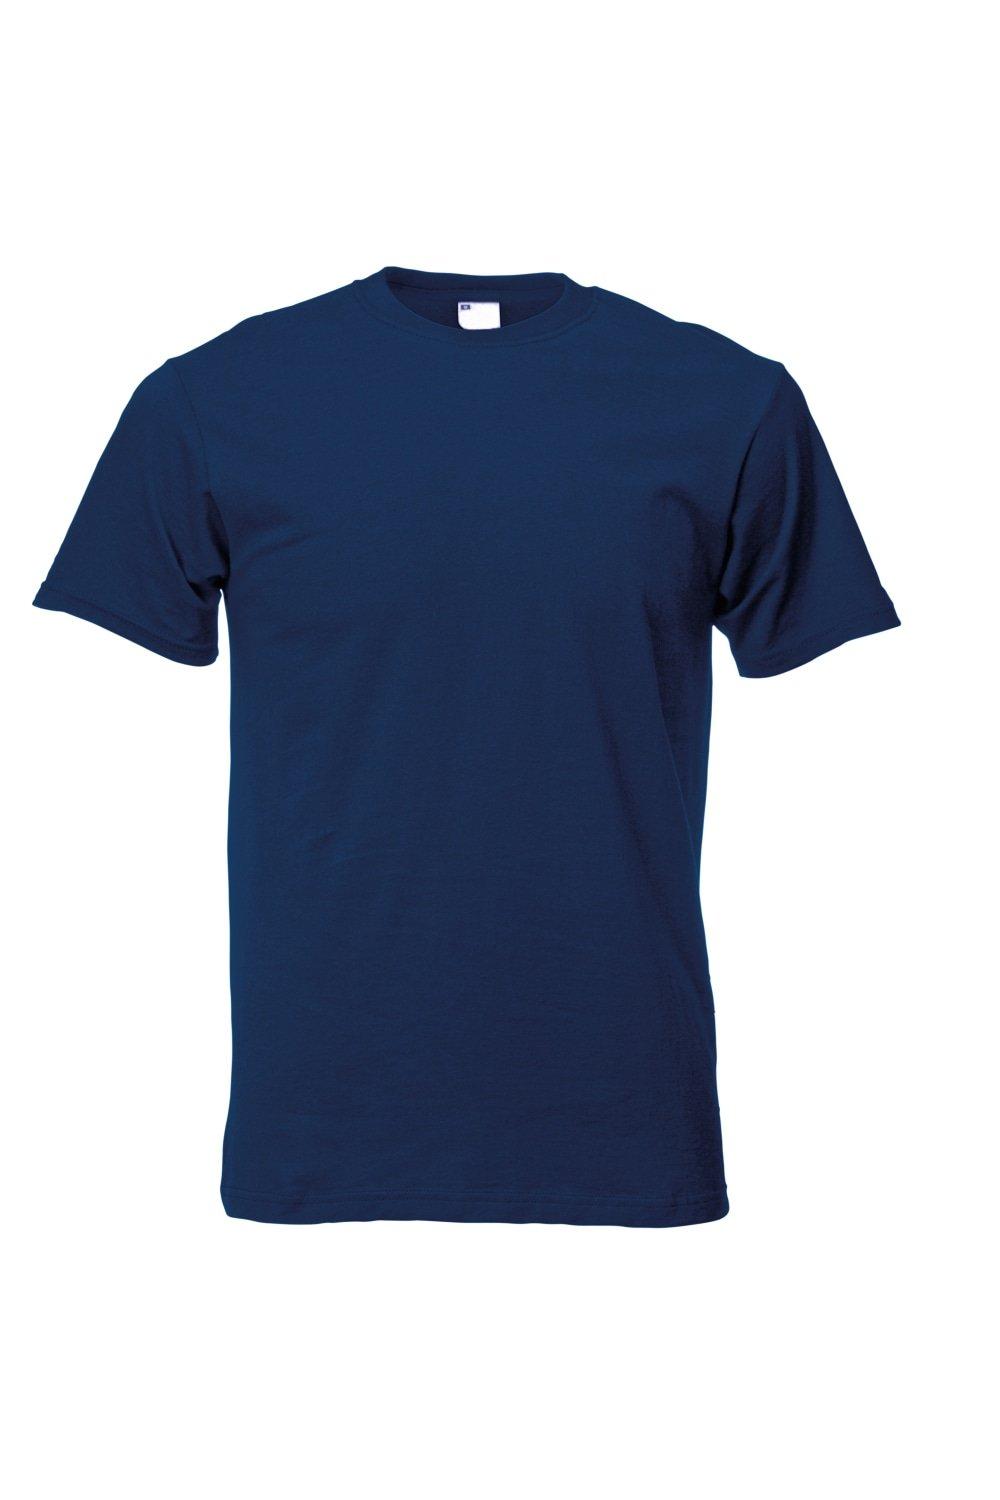 Повседневная футболка с коротким рукавом Universal Textiles, темно-синий мужская футболка лиса русская краса xl серый меланж